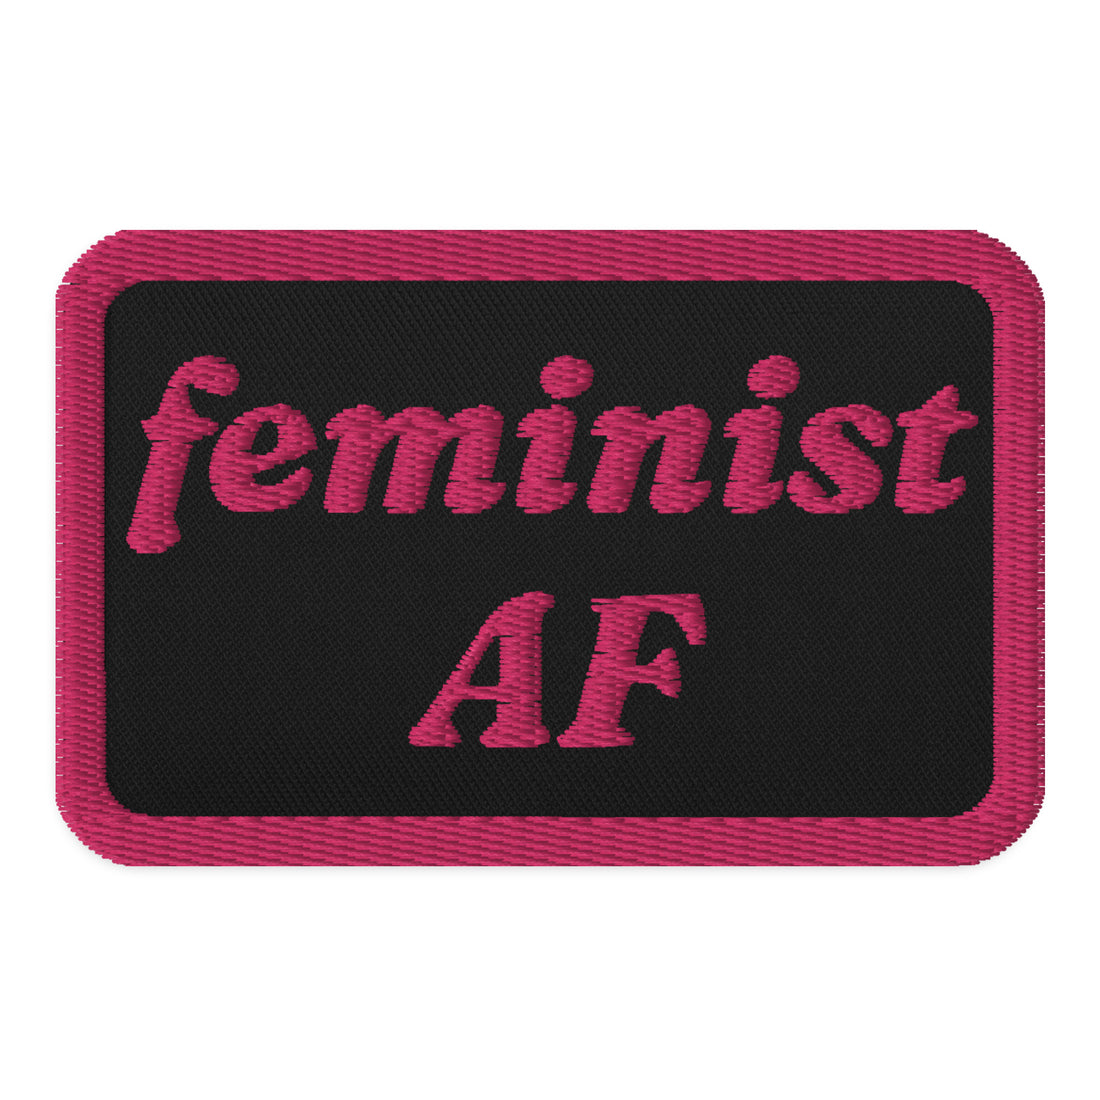 Feminist AF Embroidered patch